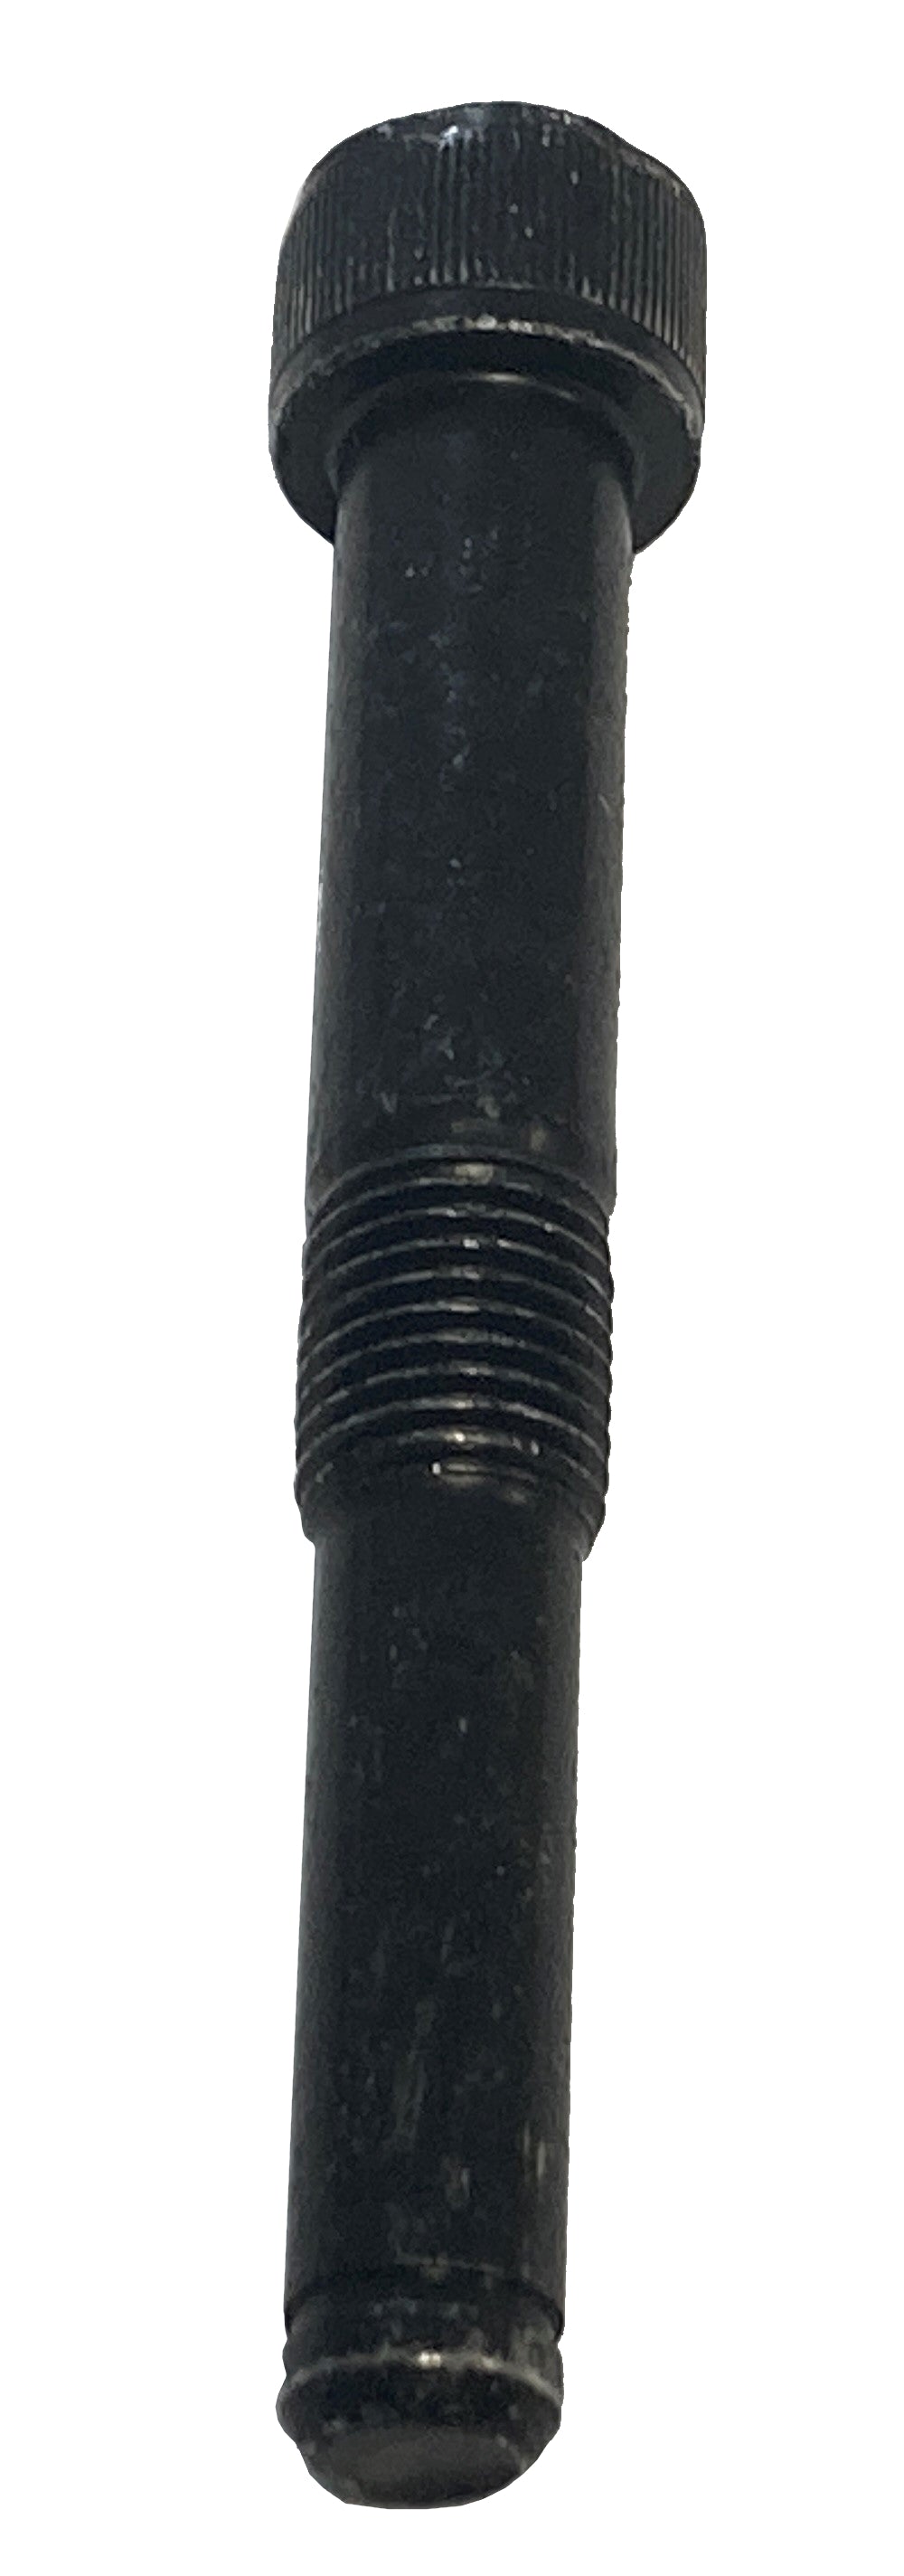 John Deere Original Equipment Screw - M152674